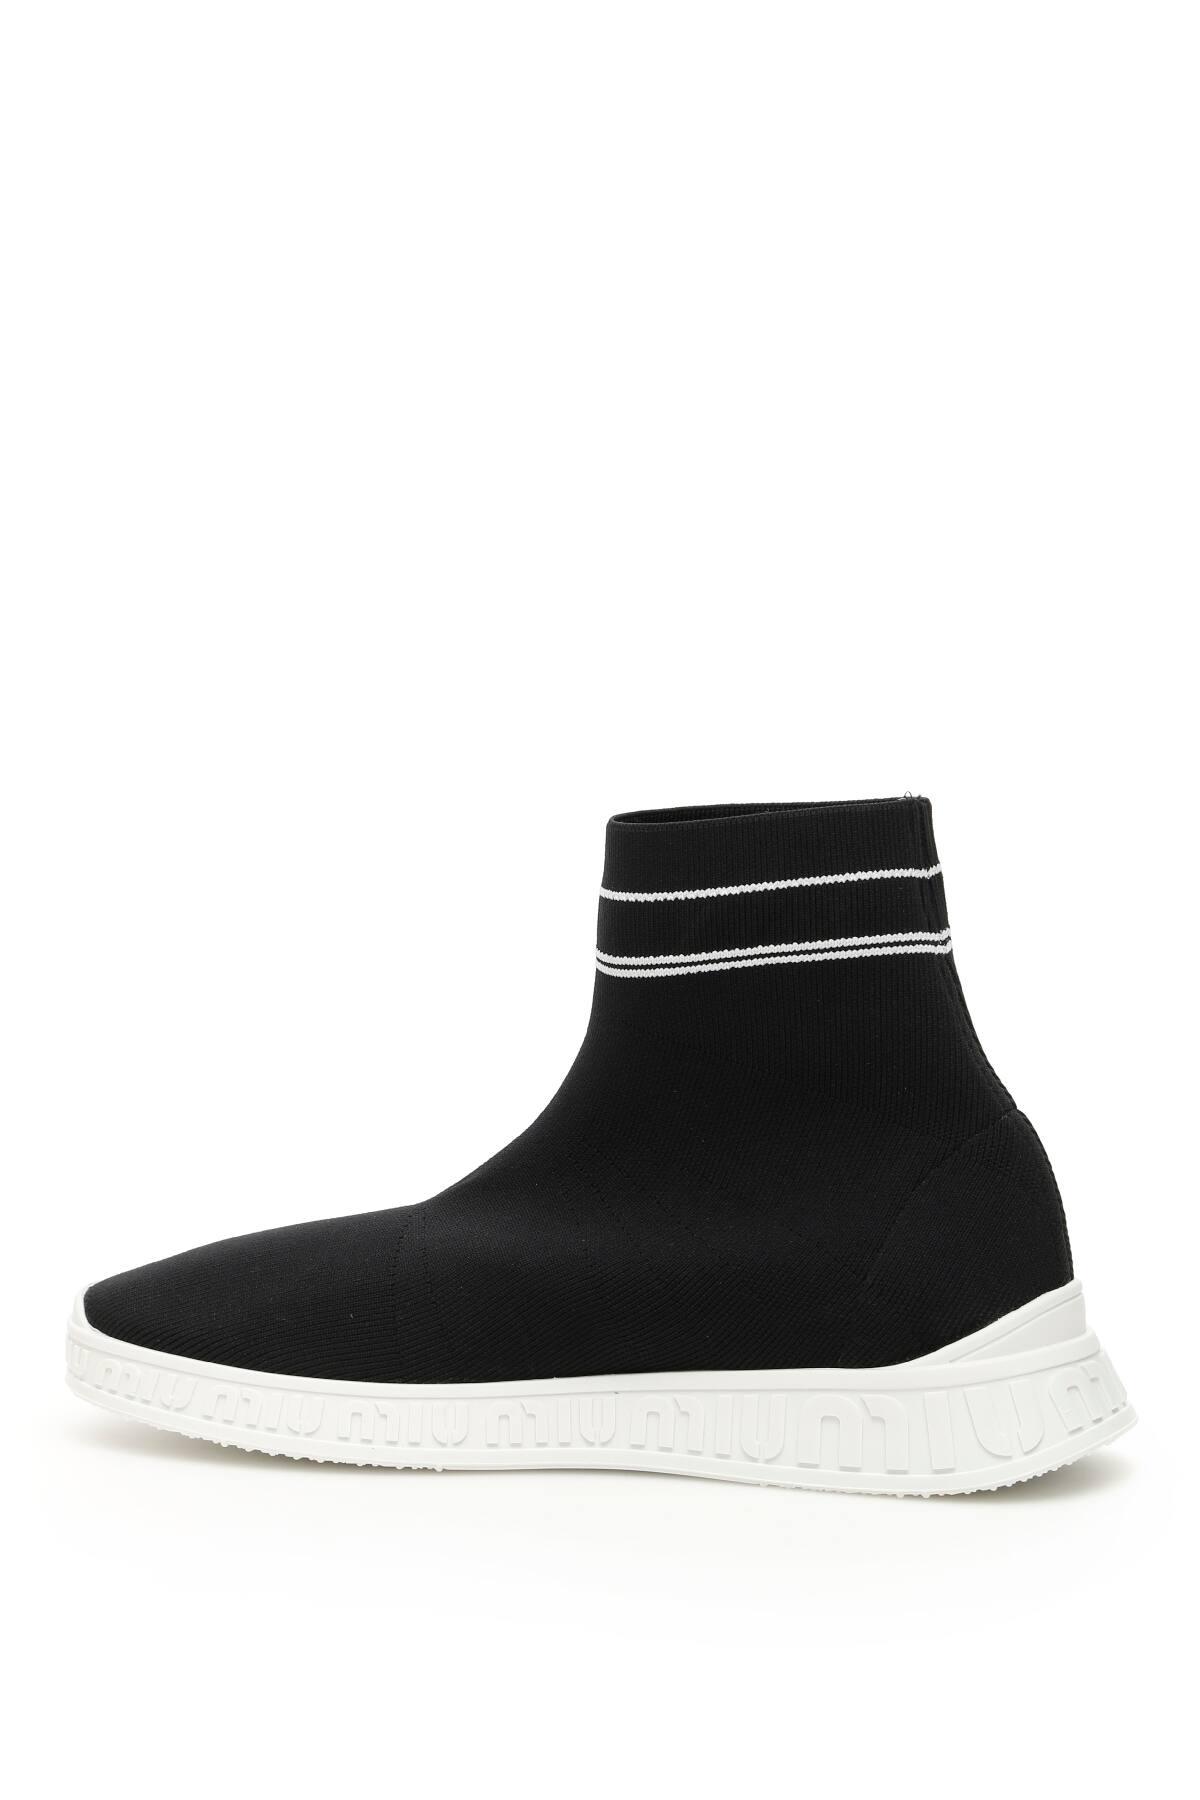 Miu Miu Synthetic Sock Fit Sneakers in Black&White (Black) - Lyst